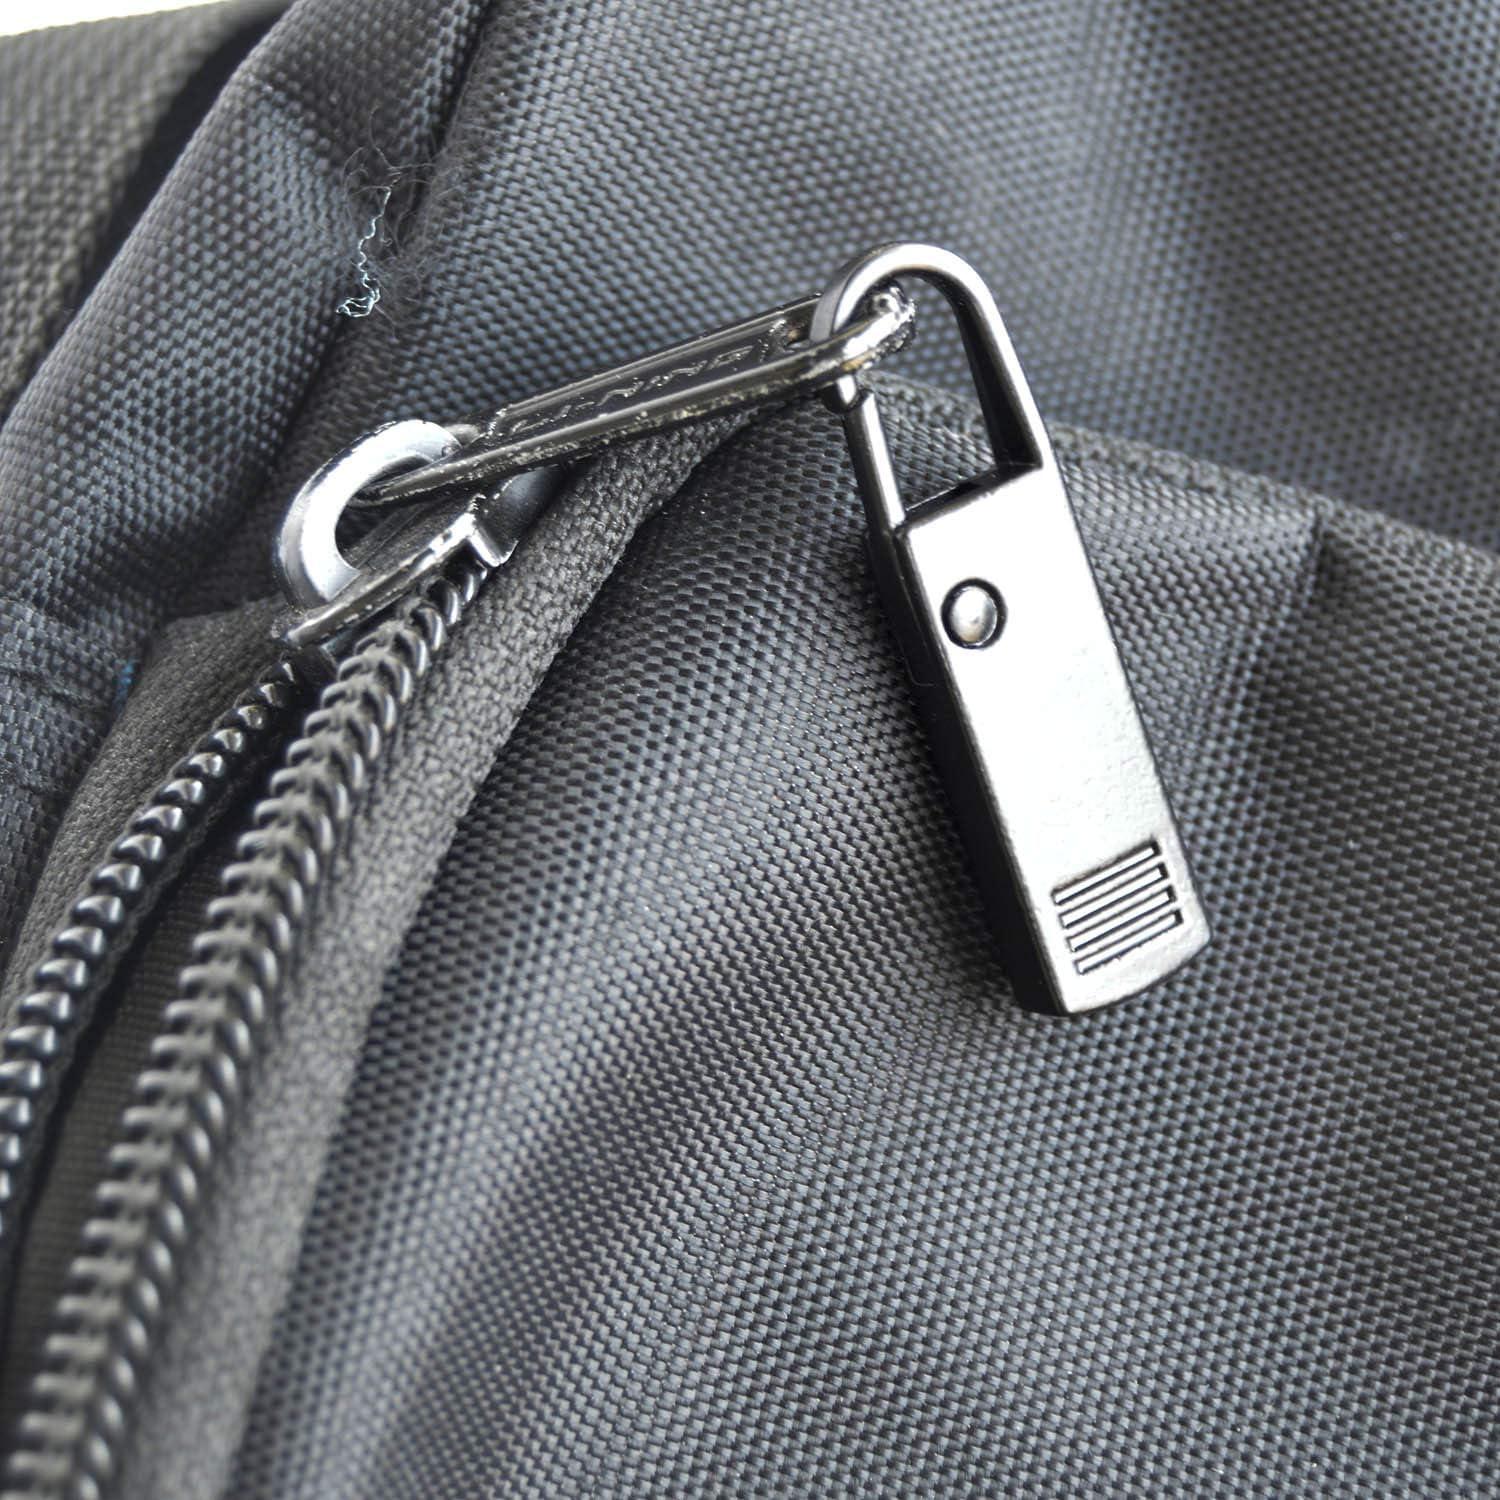 Yeezo Zipper Pull Tab Replacement Metal Zipper Extension Handle